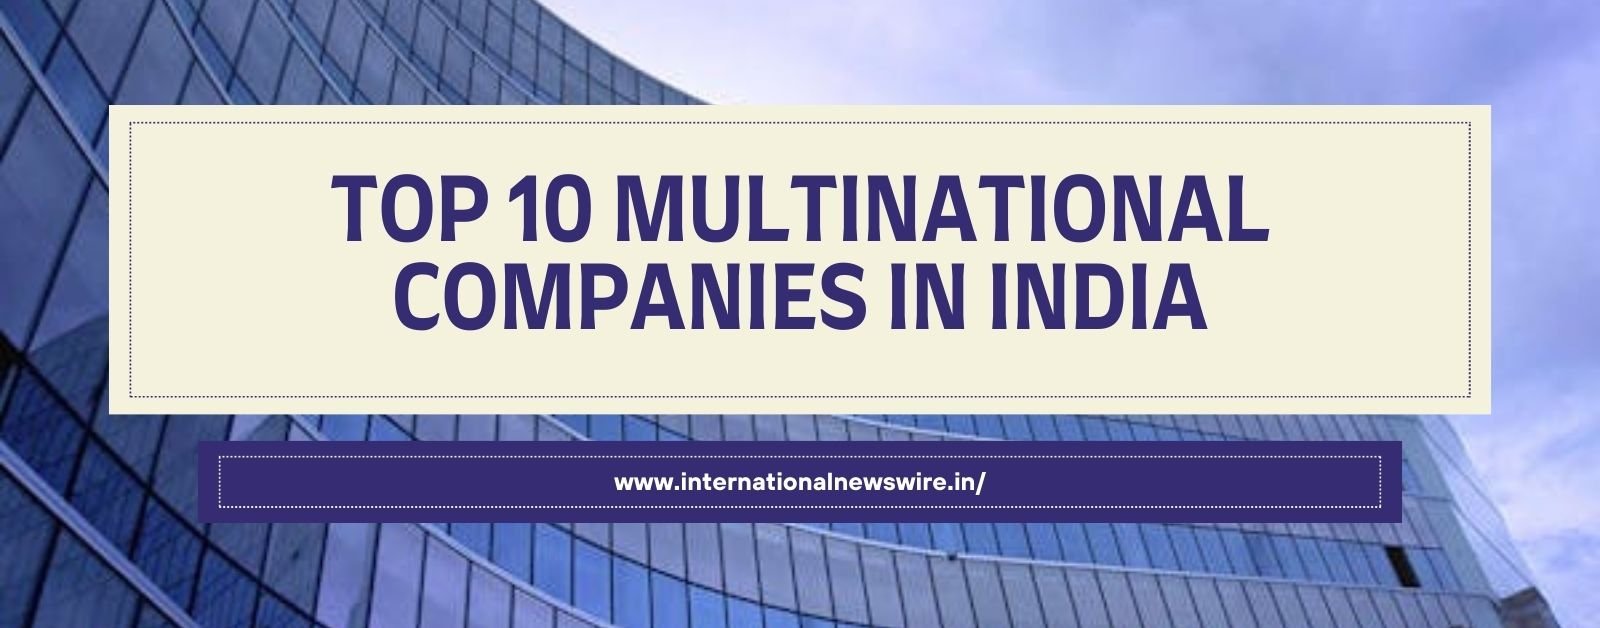 Top 10 Multinational Companies in India